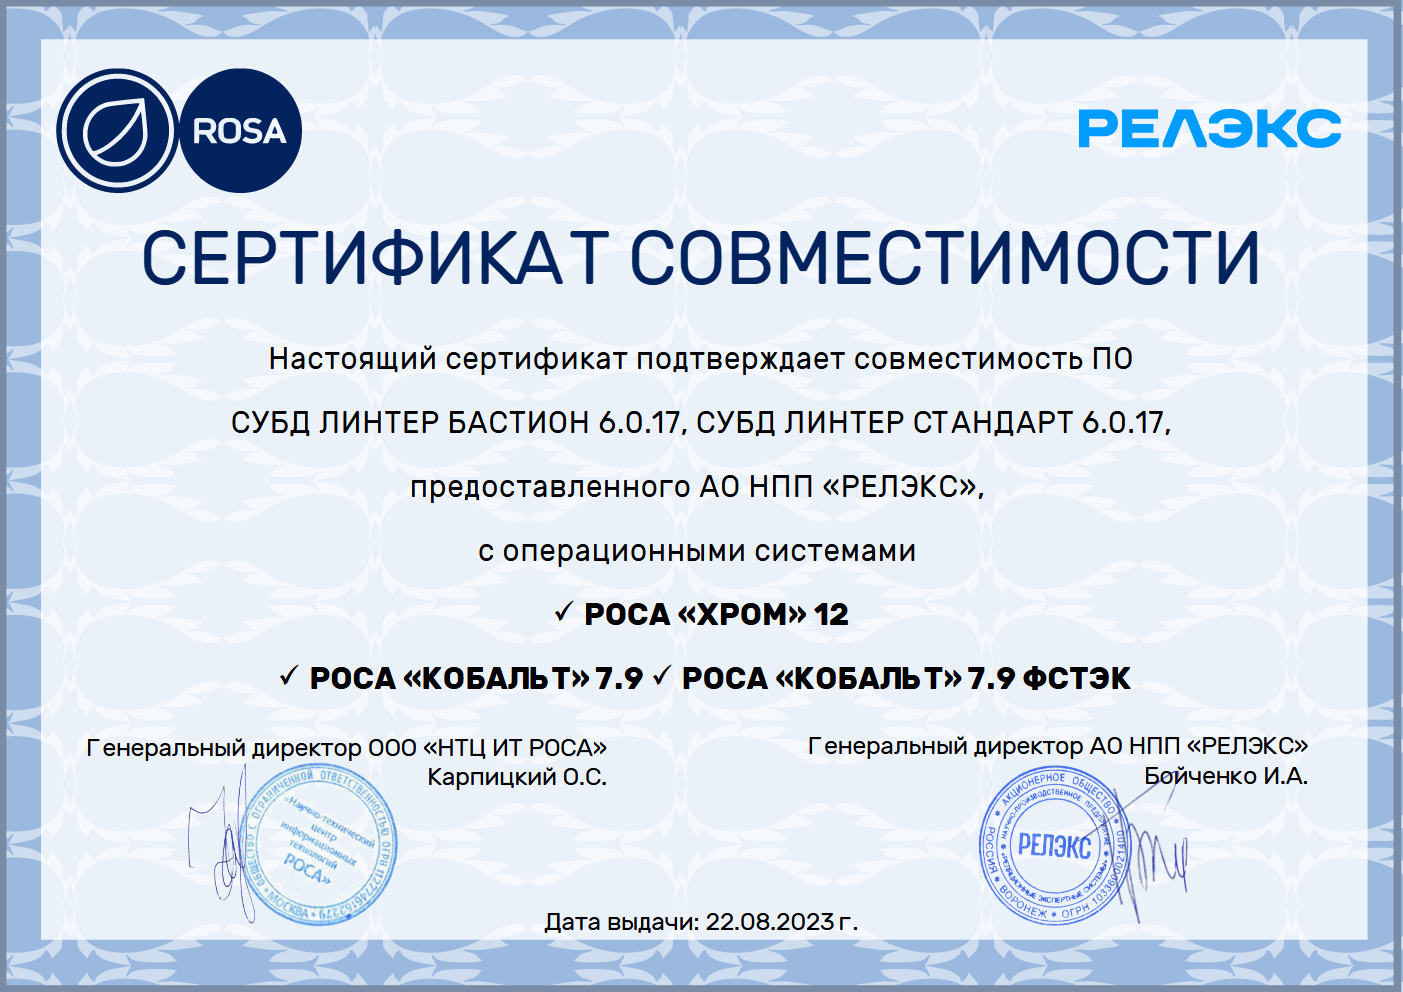 Сертификат совместимости СУБД ЛИНТЕР и ОС РОСА